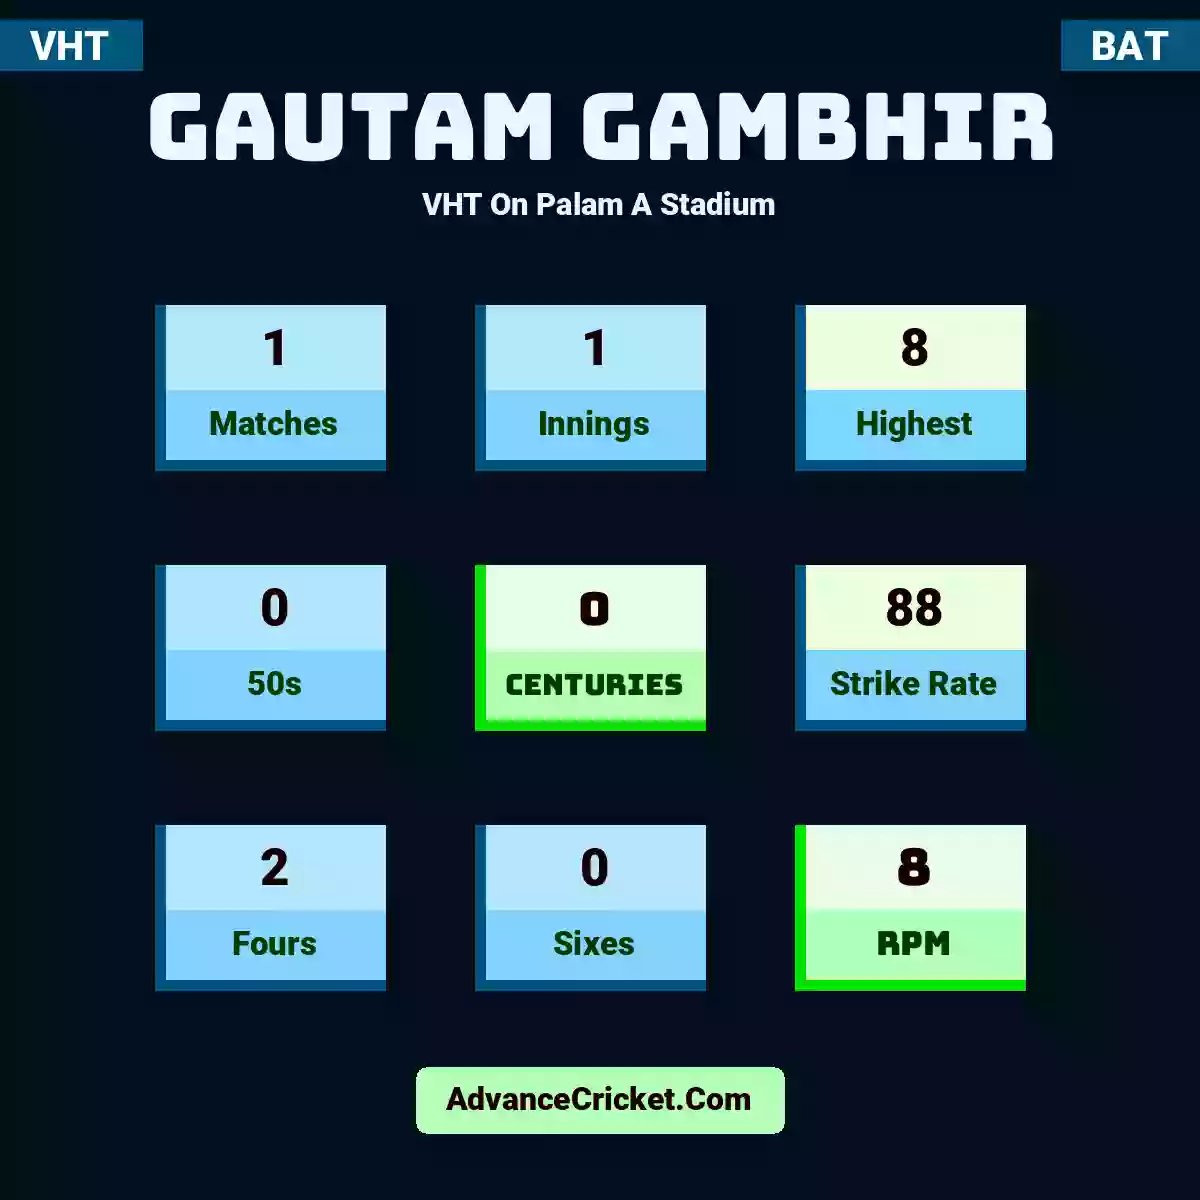 Gautam Gambhir VHT  On Palam A Stadium, Gautam Gambhir played 1 matches, scored 8 runs as highest, 0 half-centuries, and 0 centuries, with a strike rate of 88. G.Gambhir hit 2 fours and 0 sixes, with an RPM of 8.